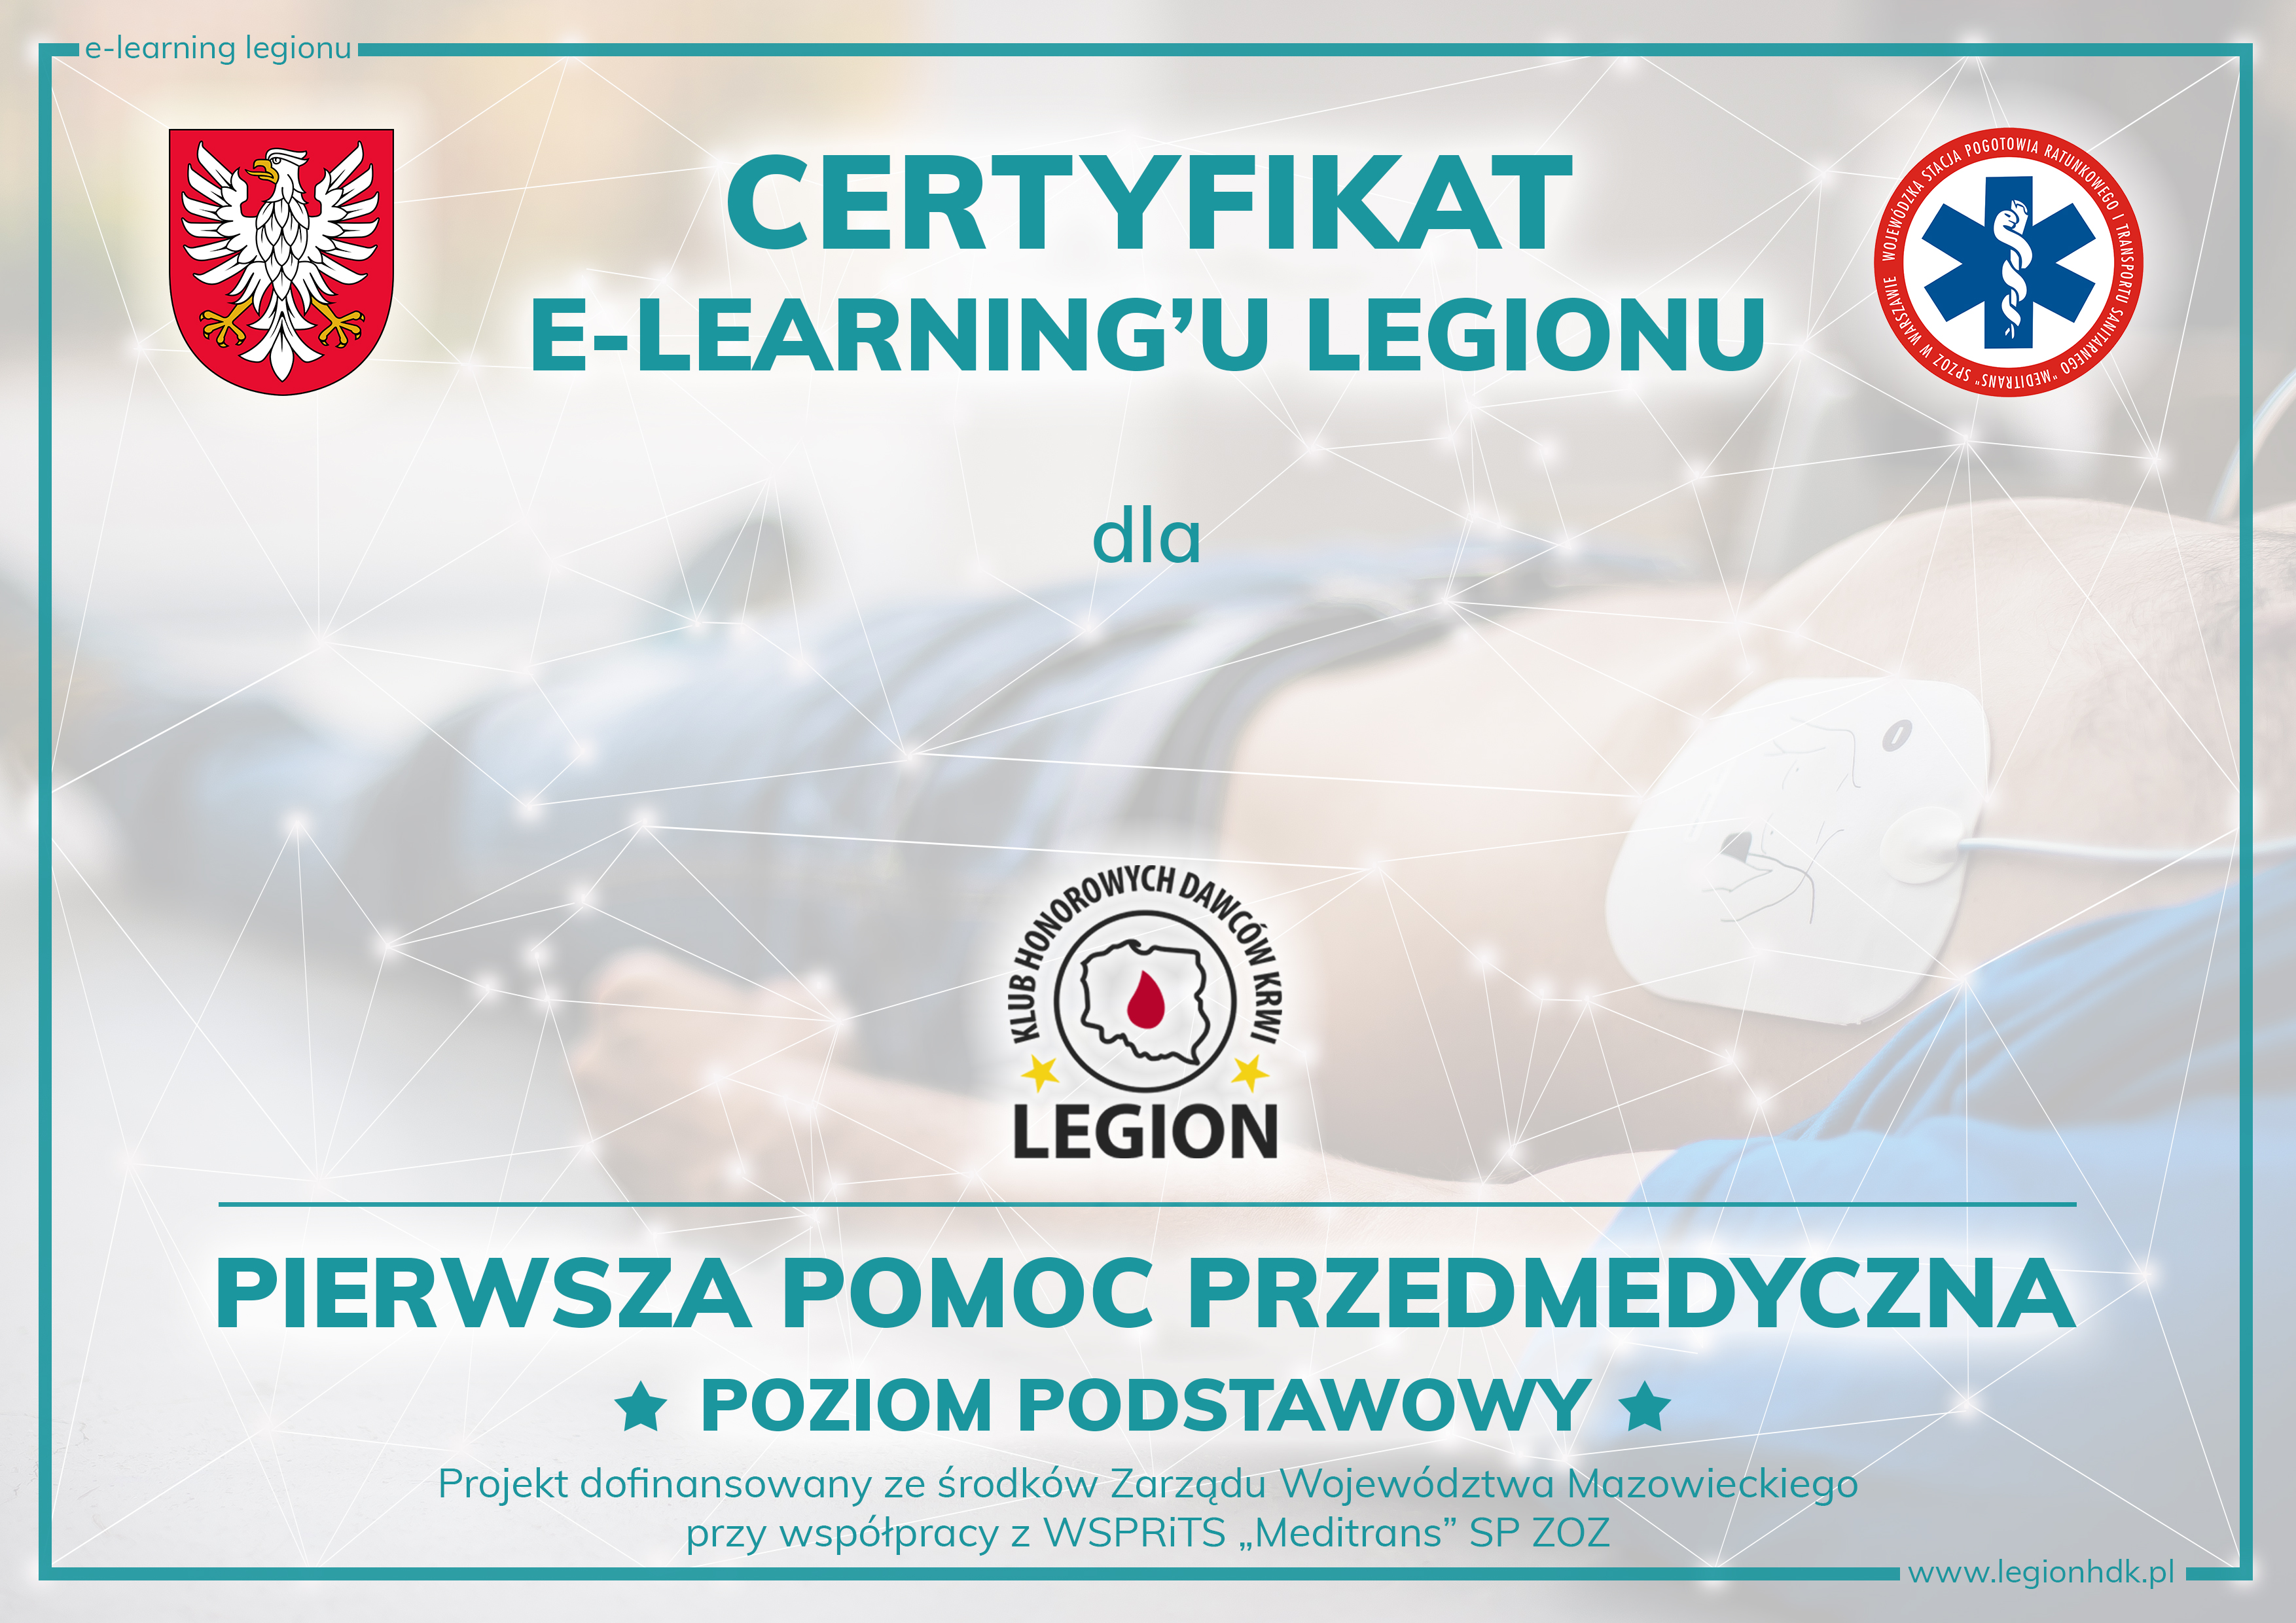 mazowsze certyfikat e learning legionu legionhdk